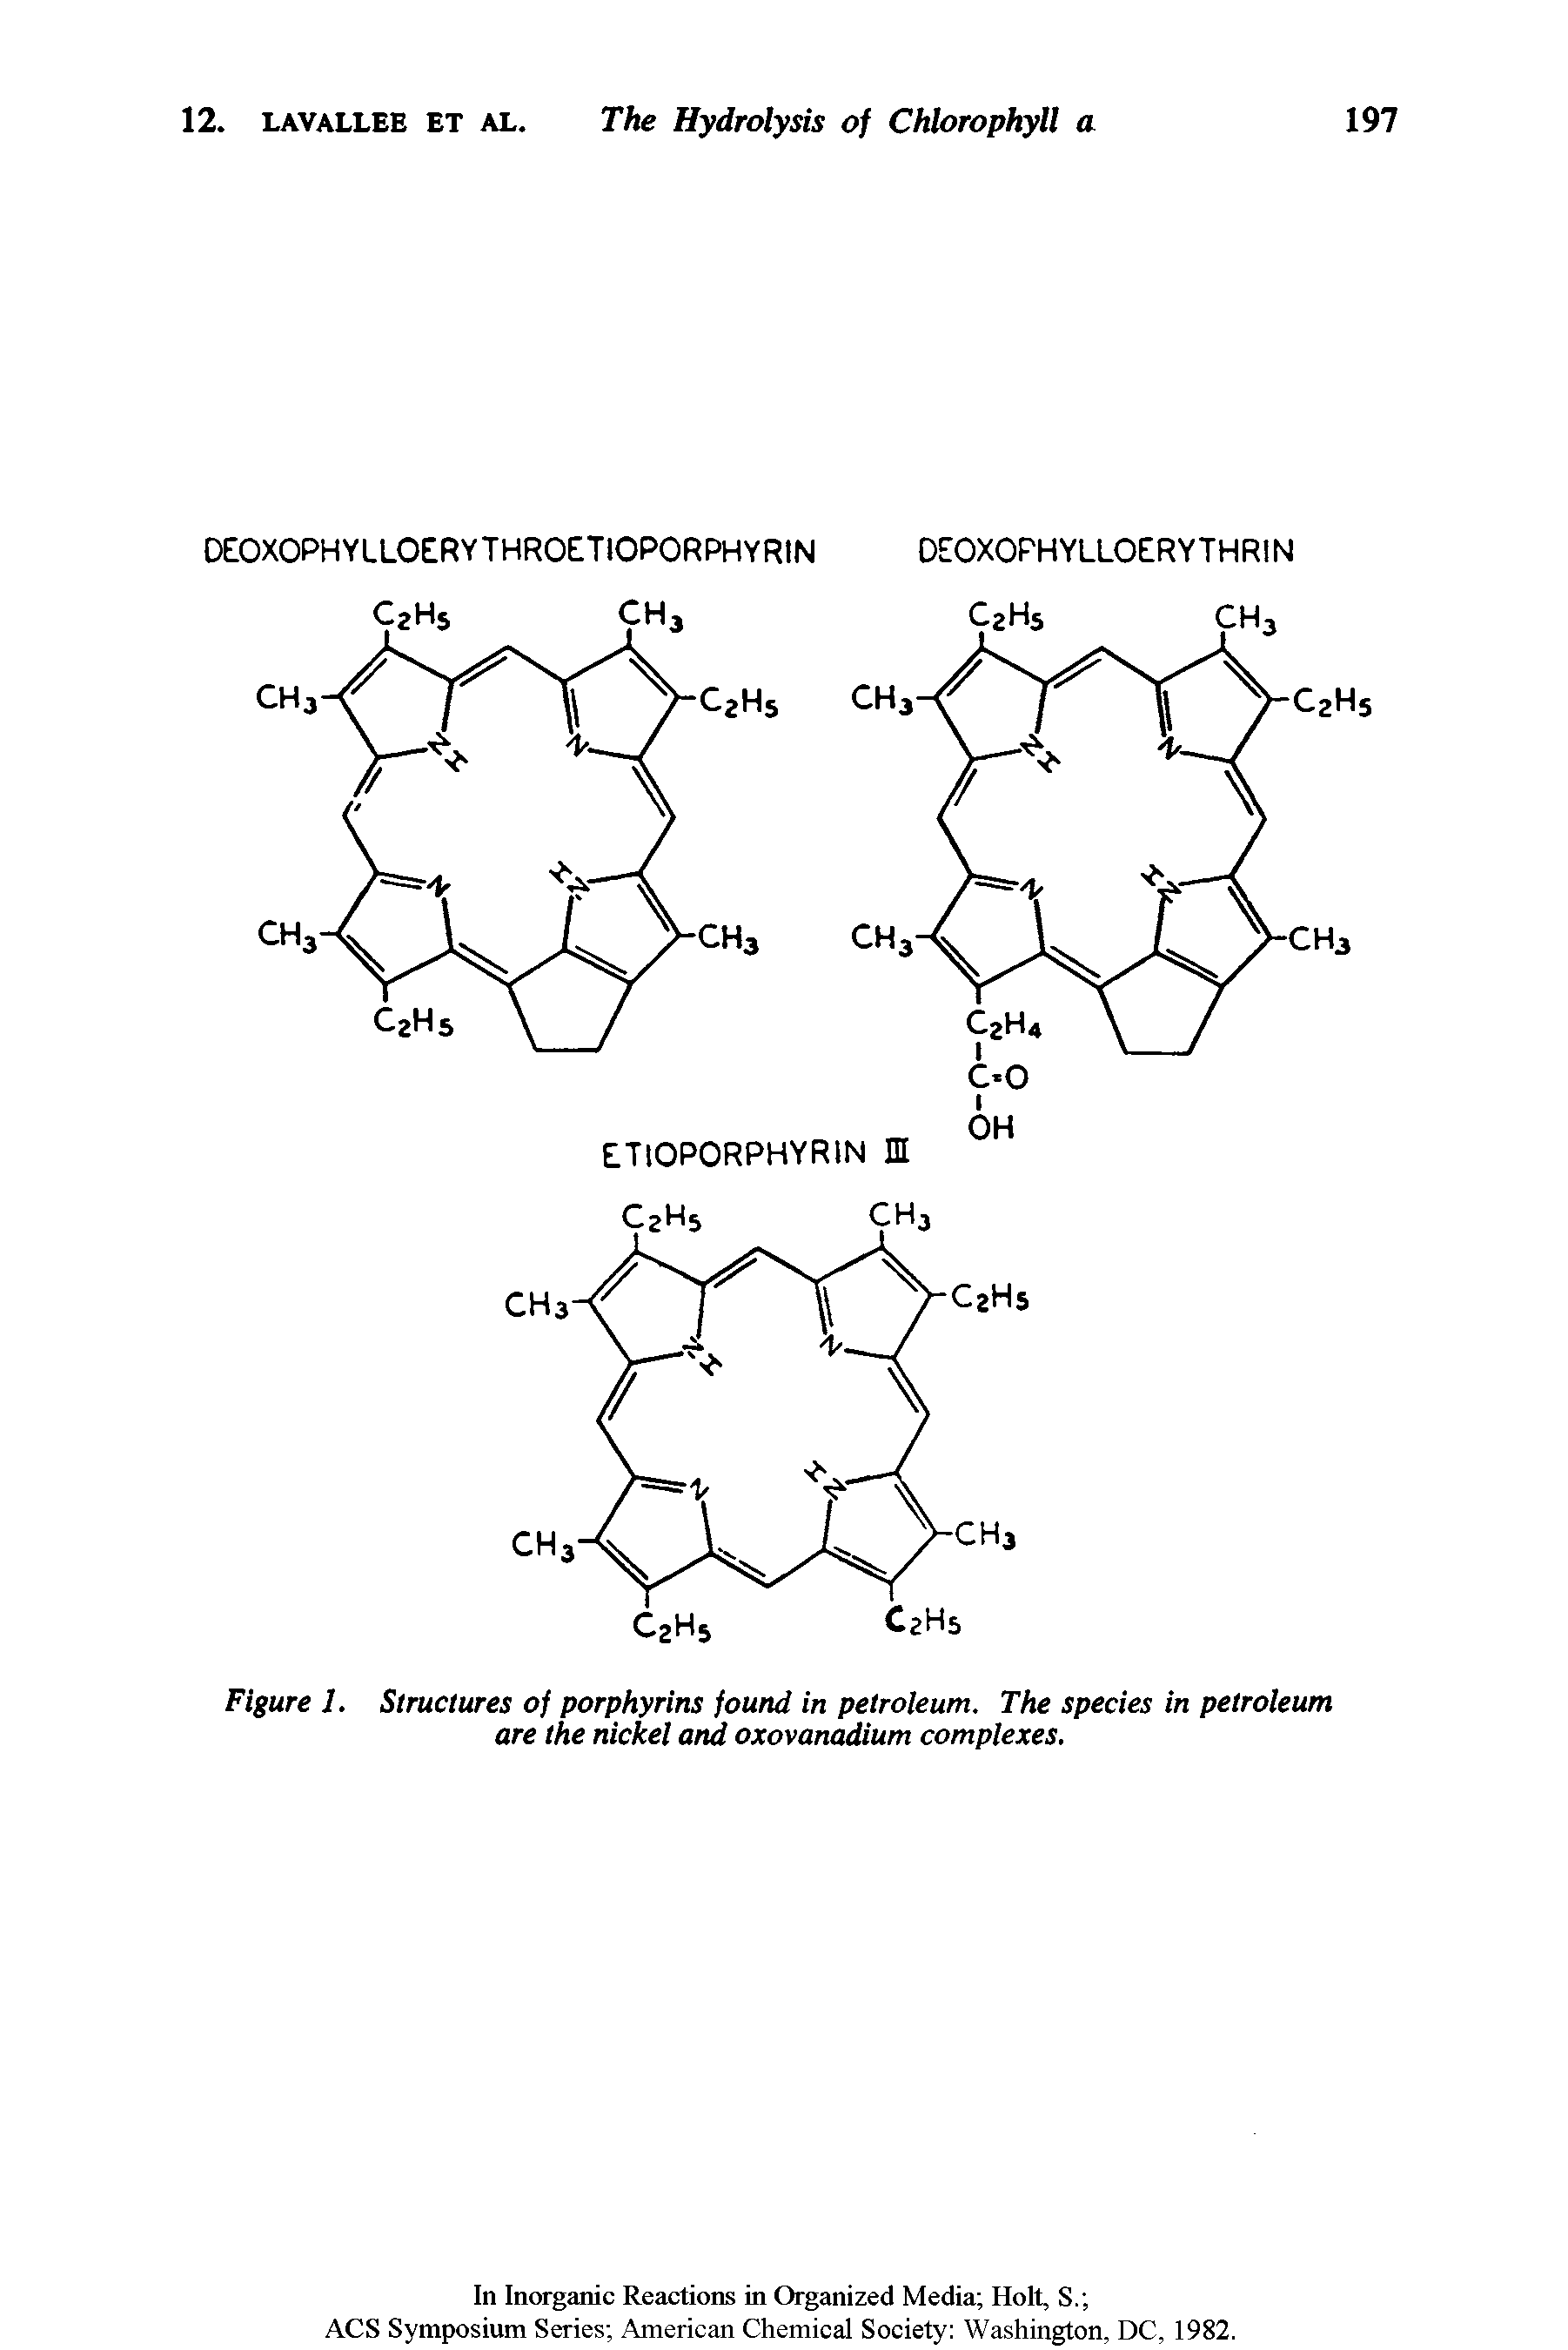 Figure 1. Structures of porphyrins found in petroleum. The species in petroleum are the nickel arid oxovanadium complexes.